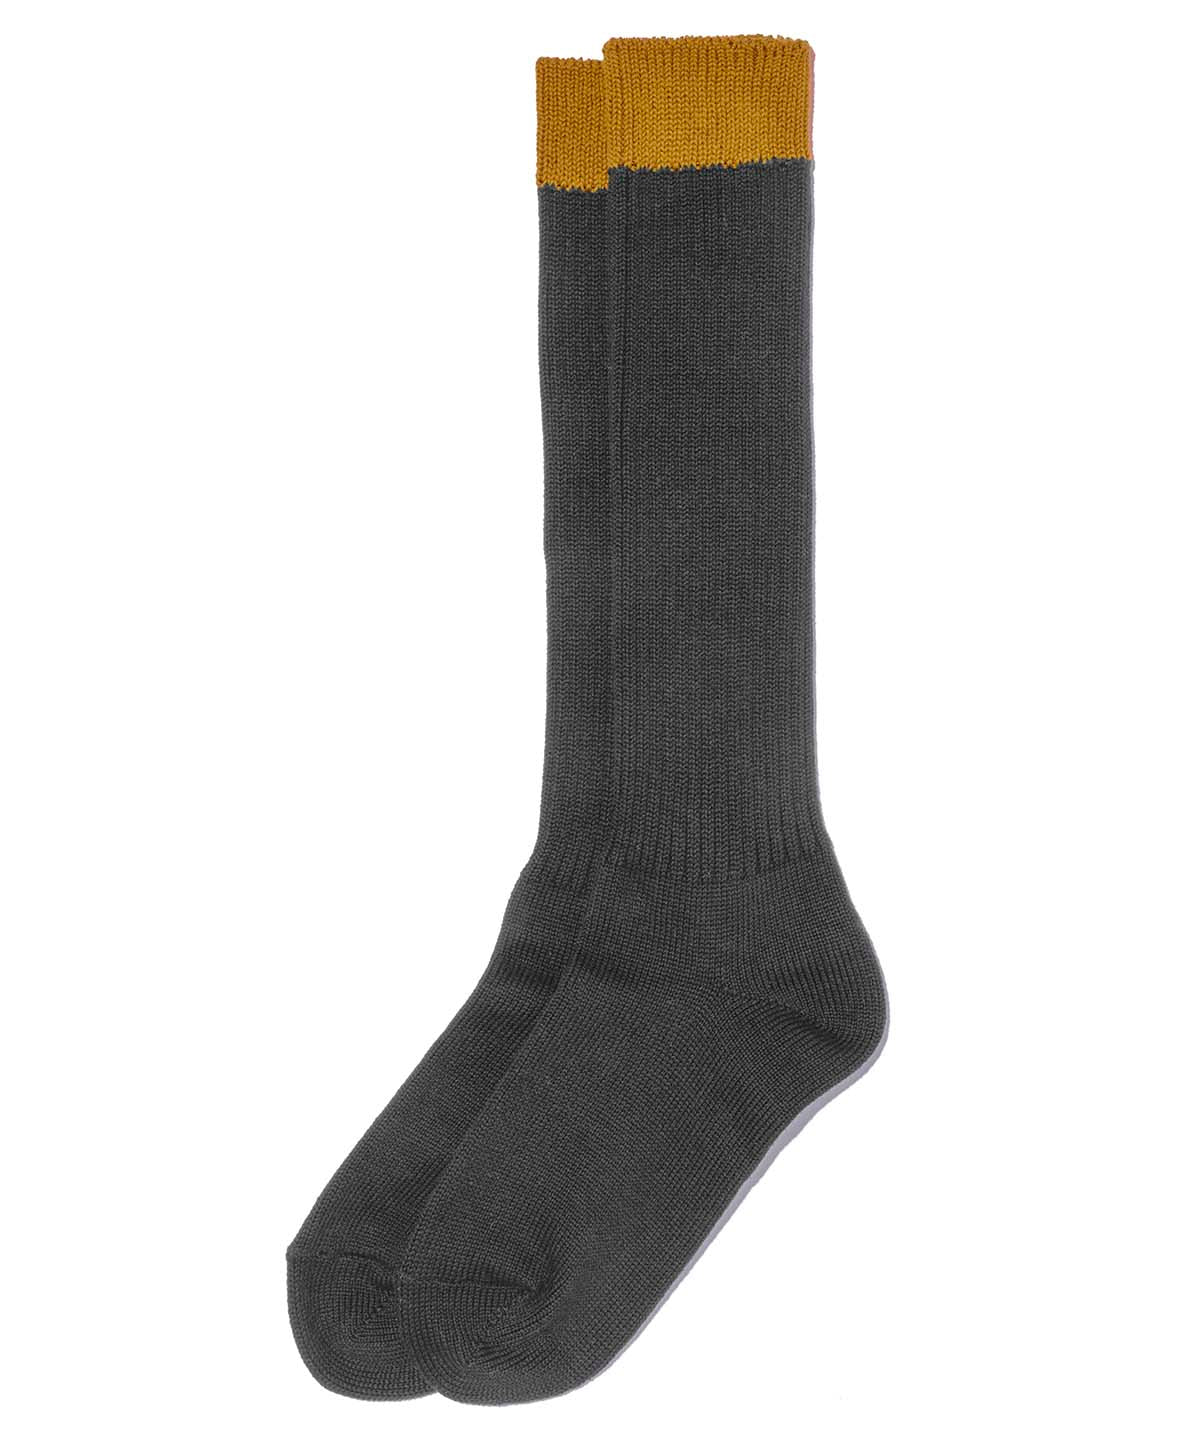 靴子袜子 /木炭灰色 /黄色